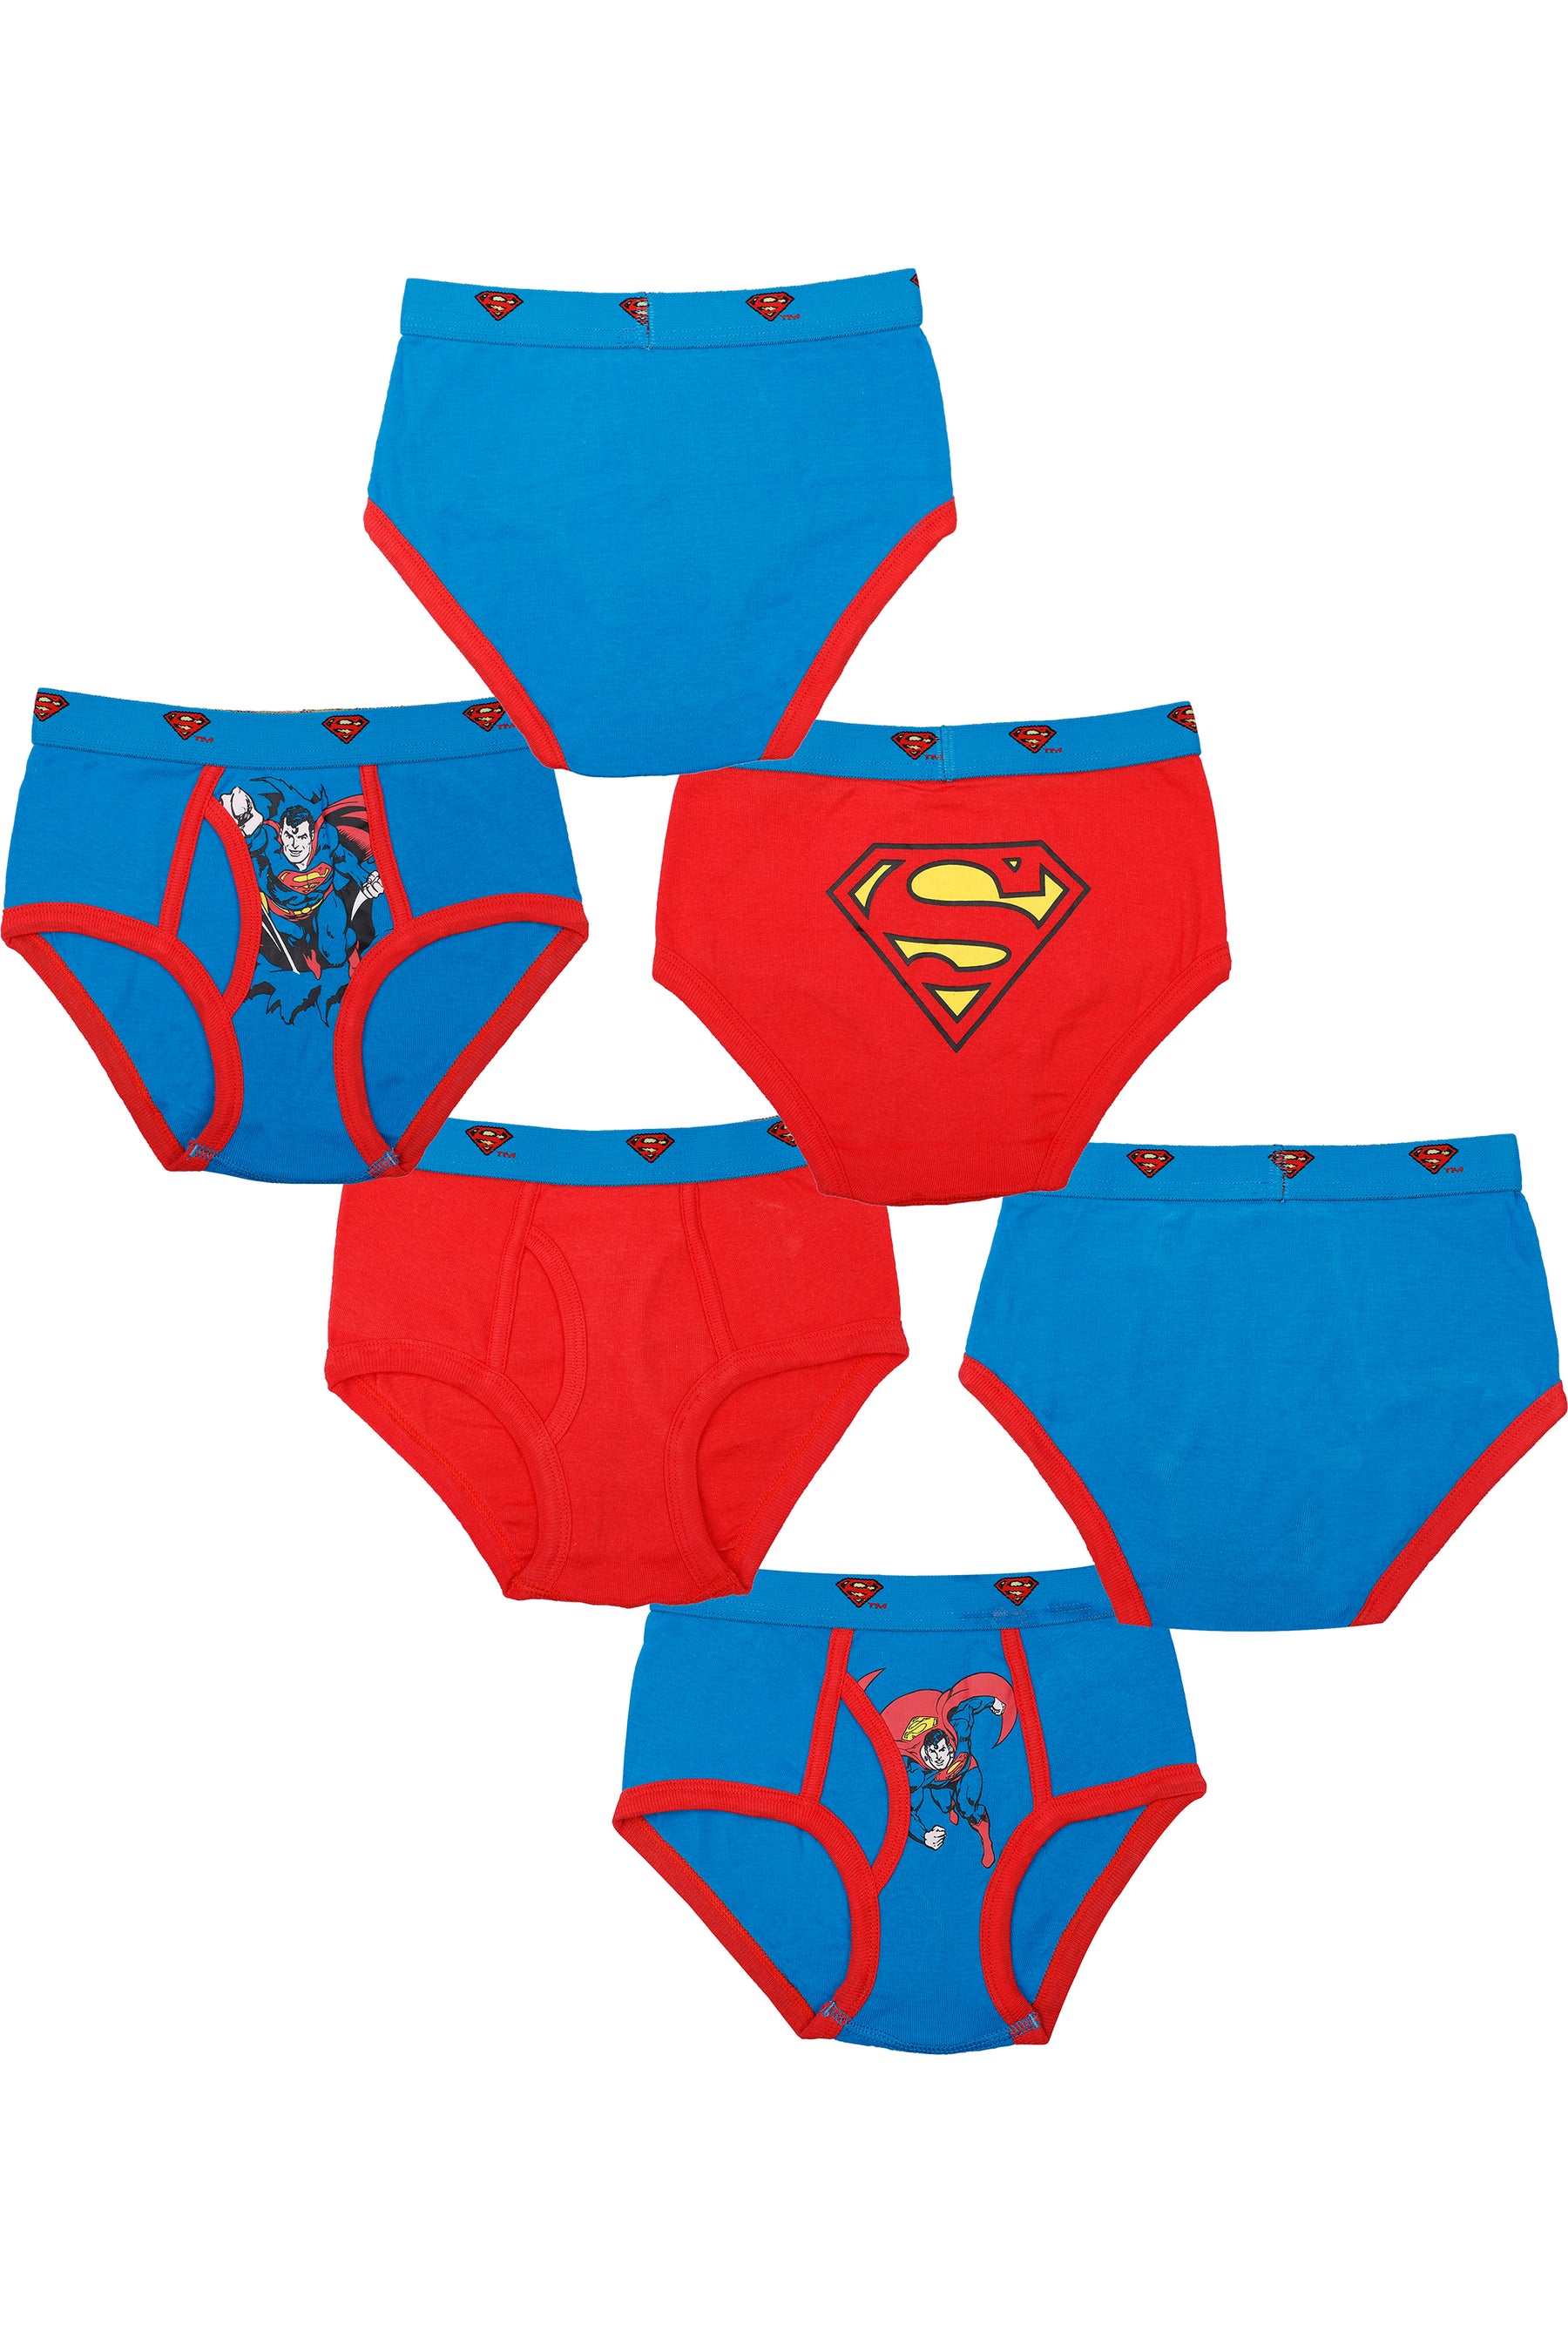 PSD DC - Superman Halftone Boxer Briefs Men's Underwear